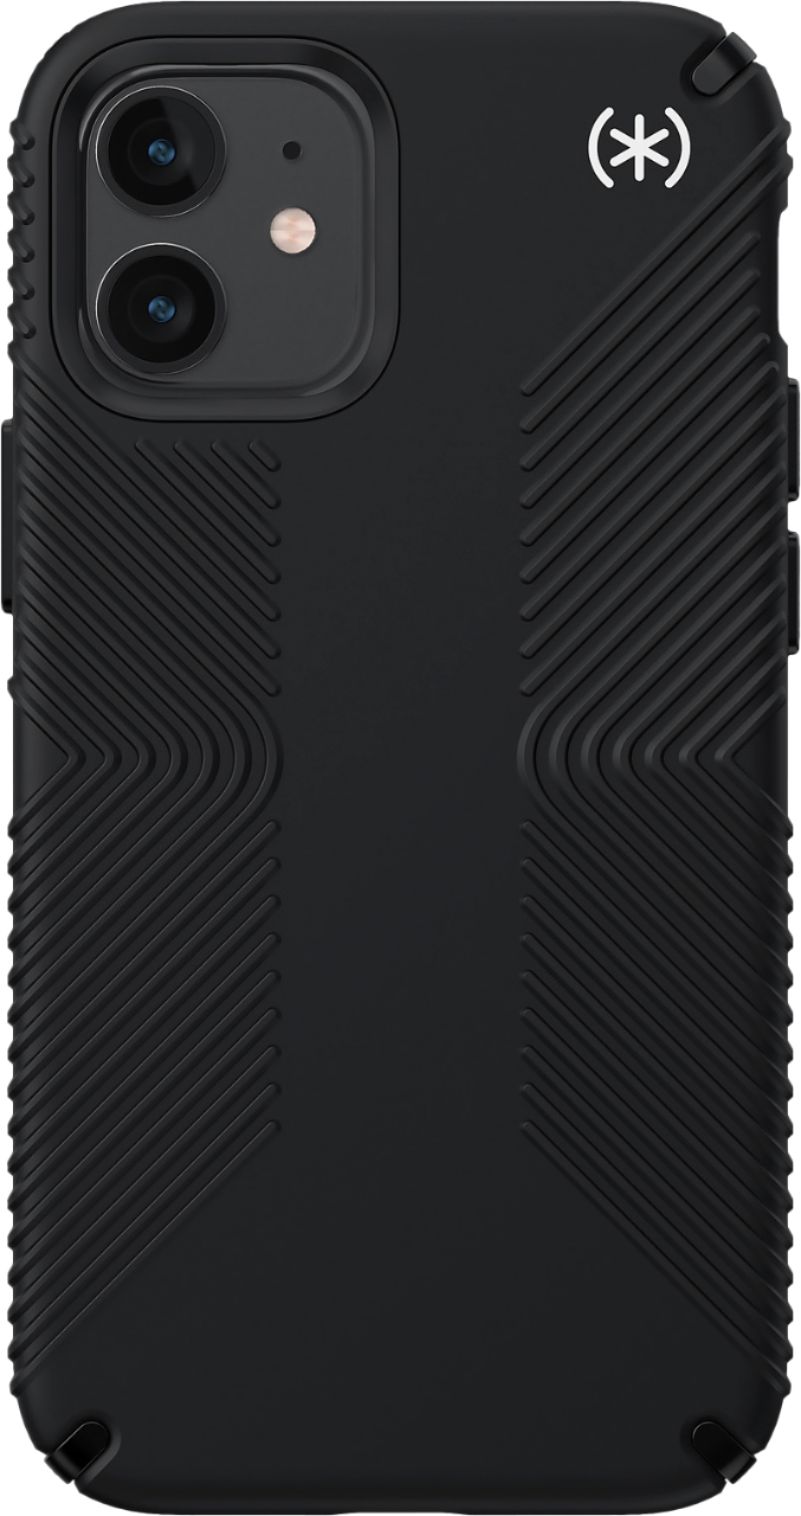 Speck Presidio2 Grip Case For Apple Iphone 12 Mini Black Black White D143 Best Buy